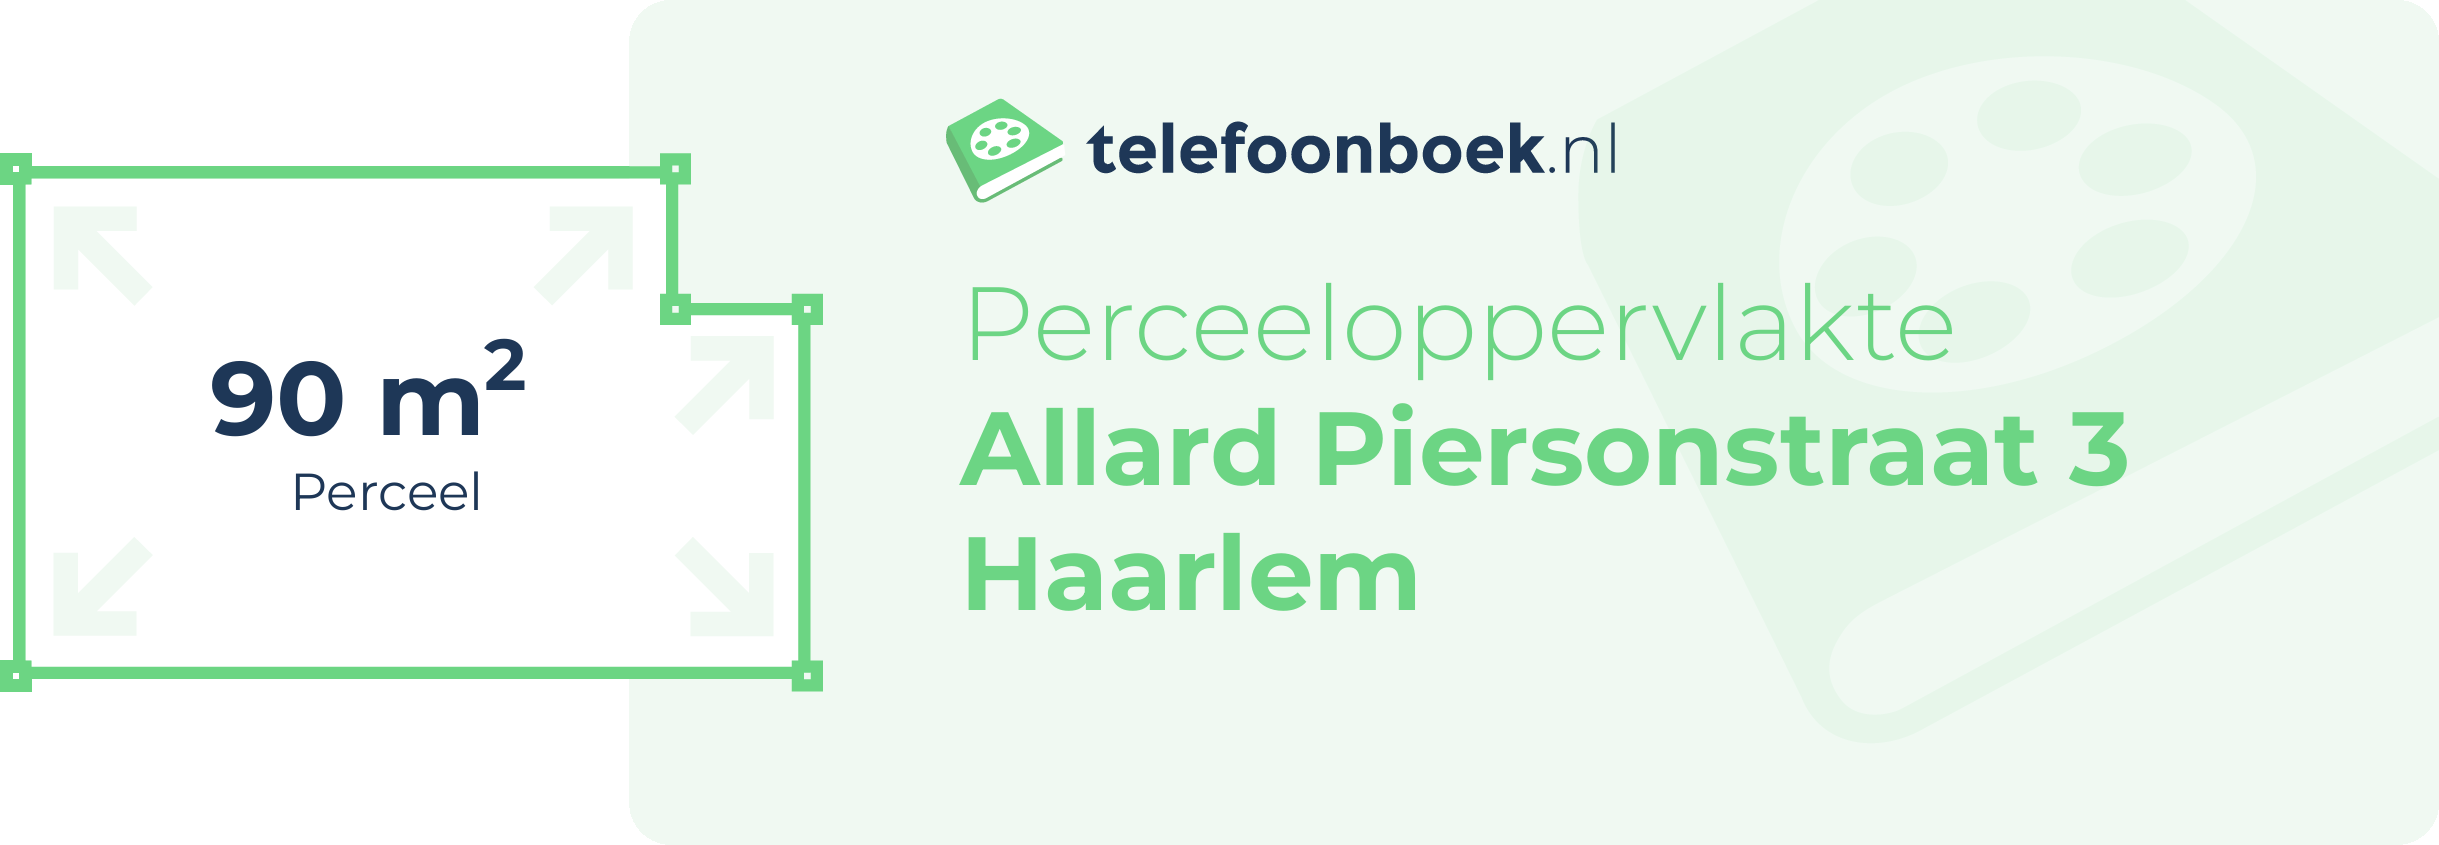 Perceeloppervlakte Allard Piersonstraat 3 Haarlem